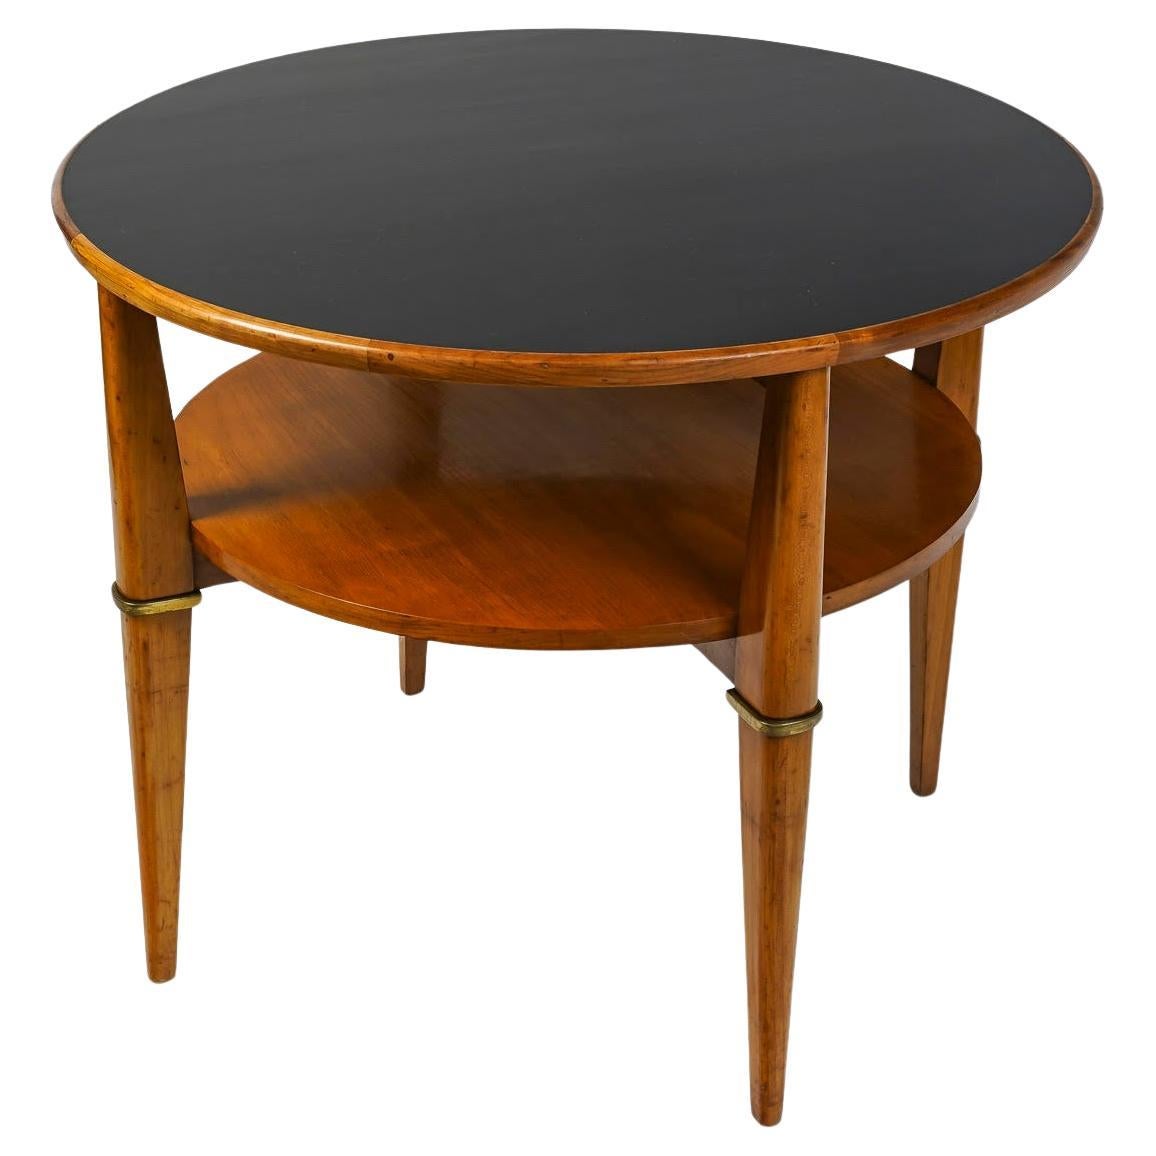 Pedestal Table, Modernist Period, Year 1940.